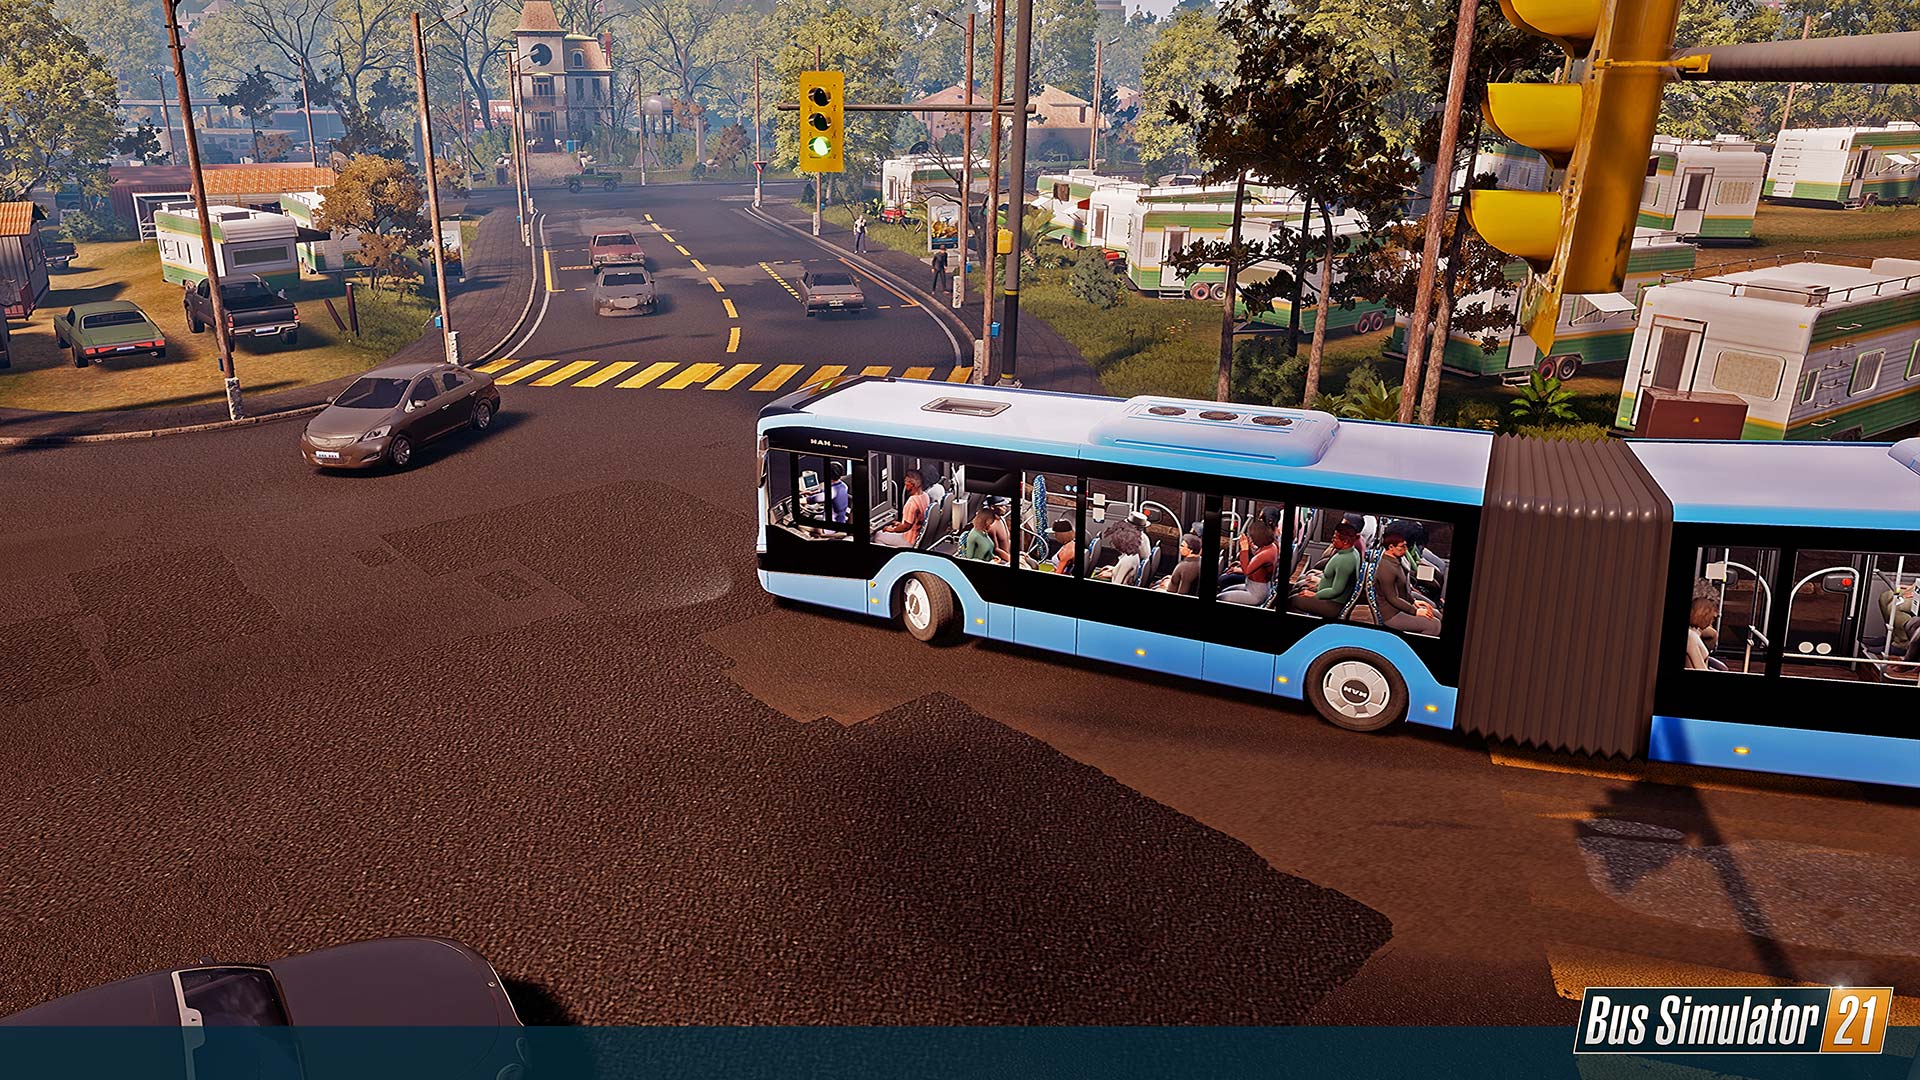 Bus Simulator 2023 download the last version for ios